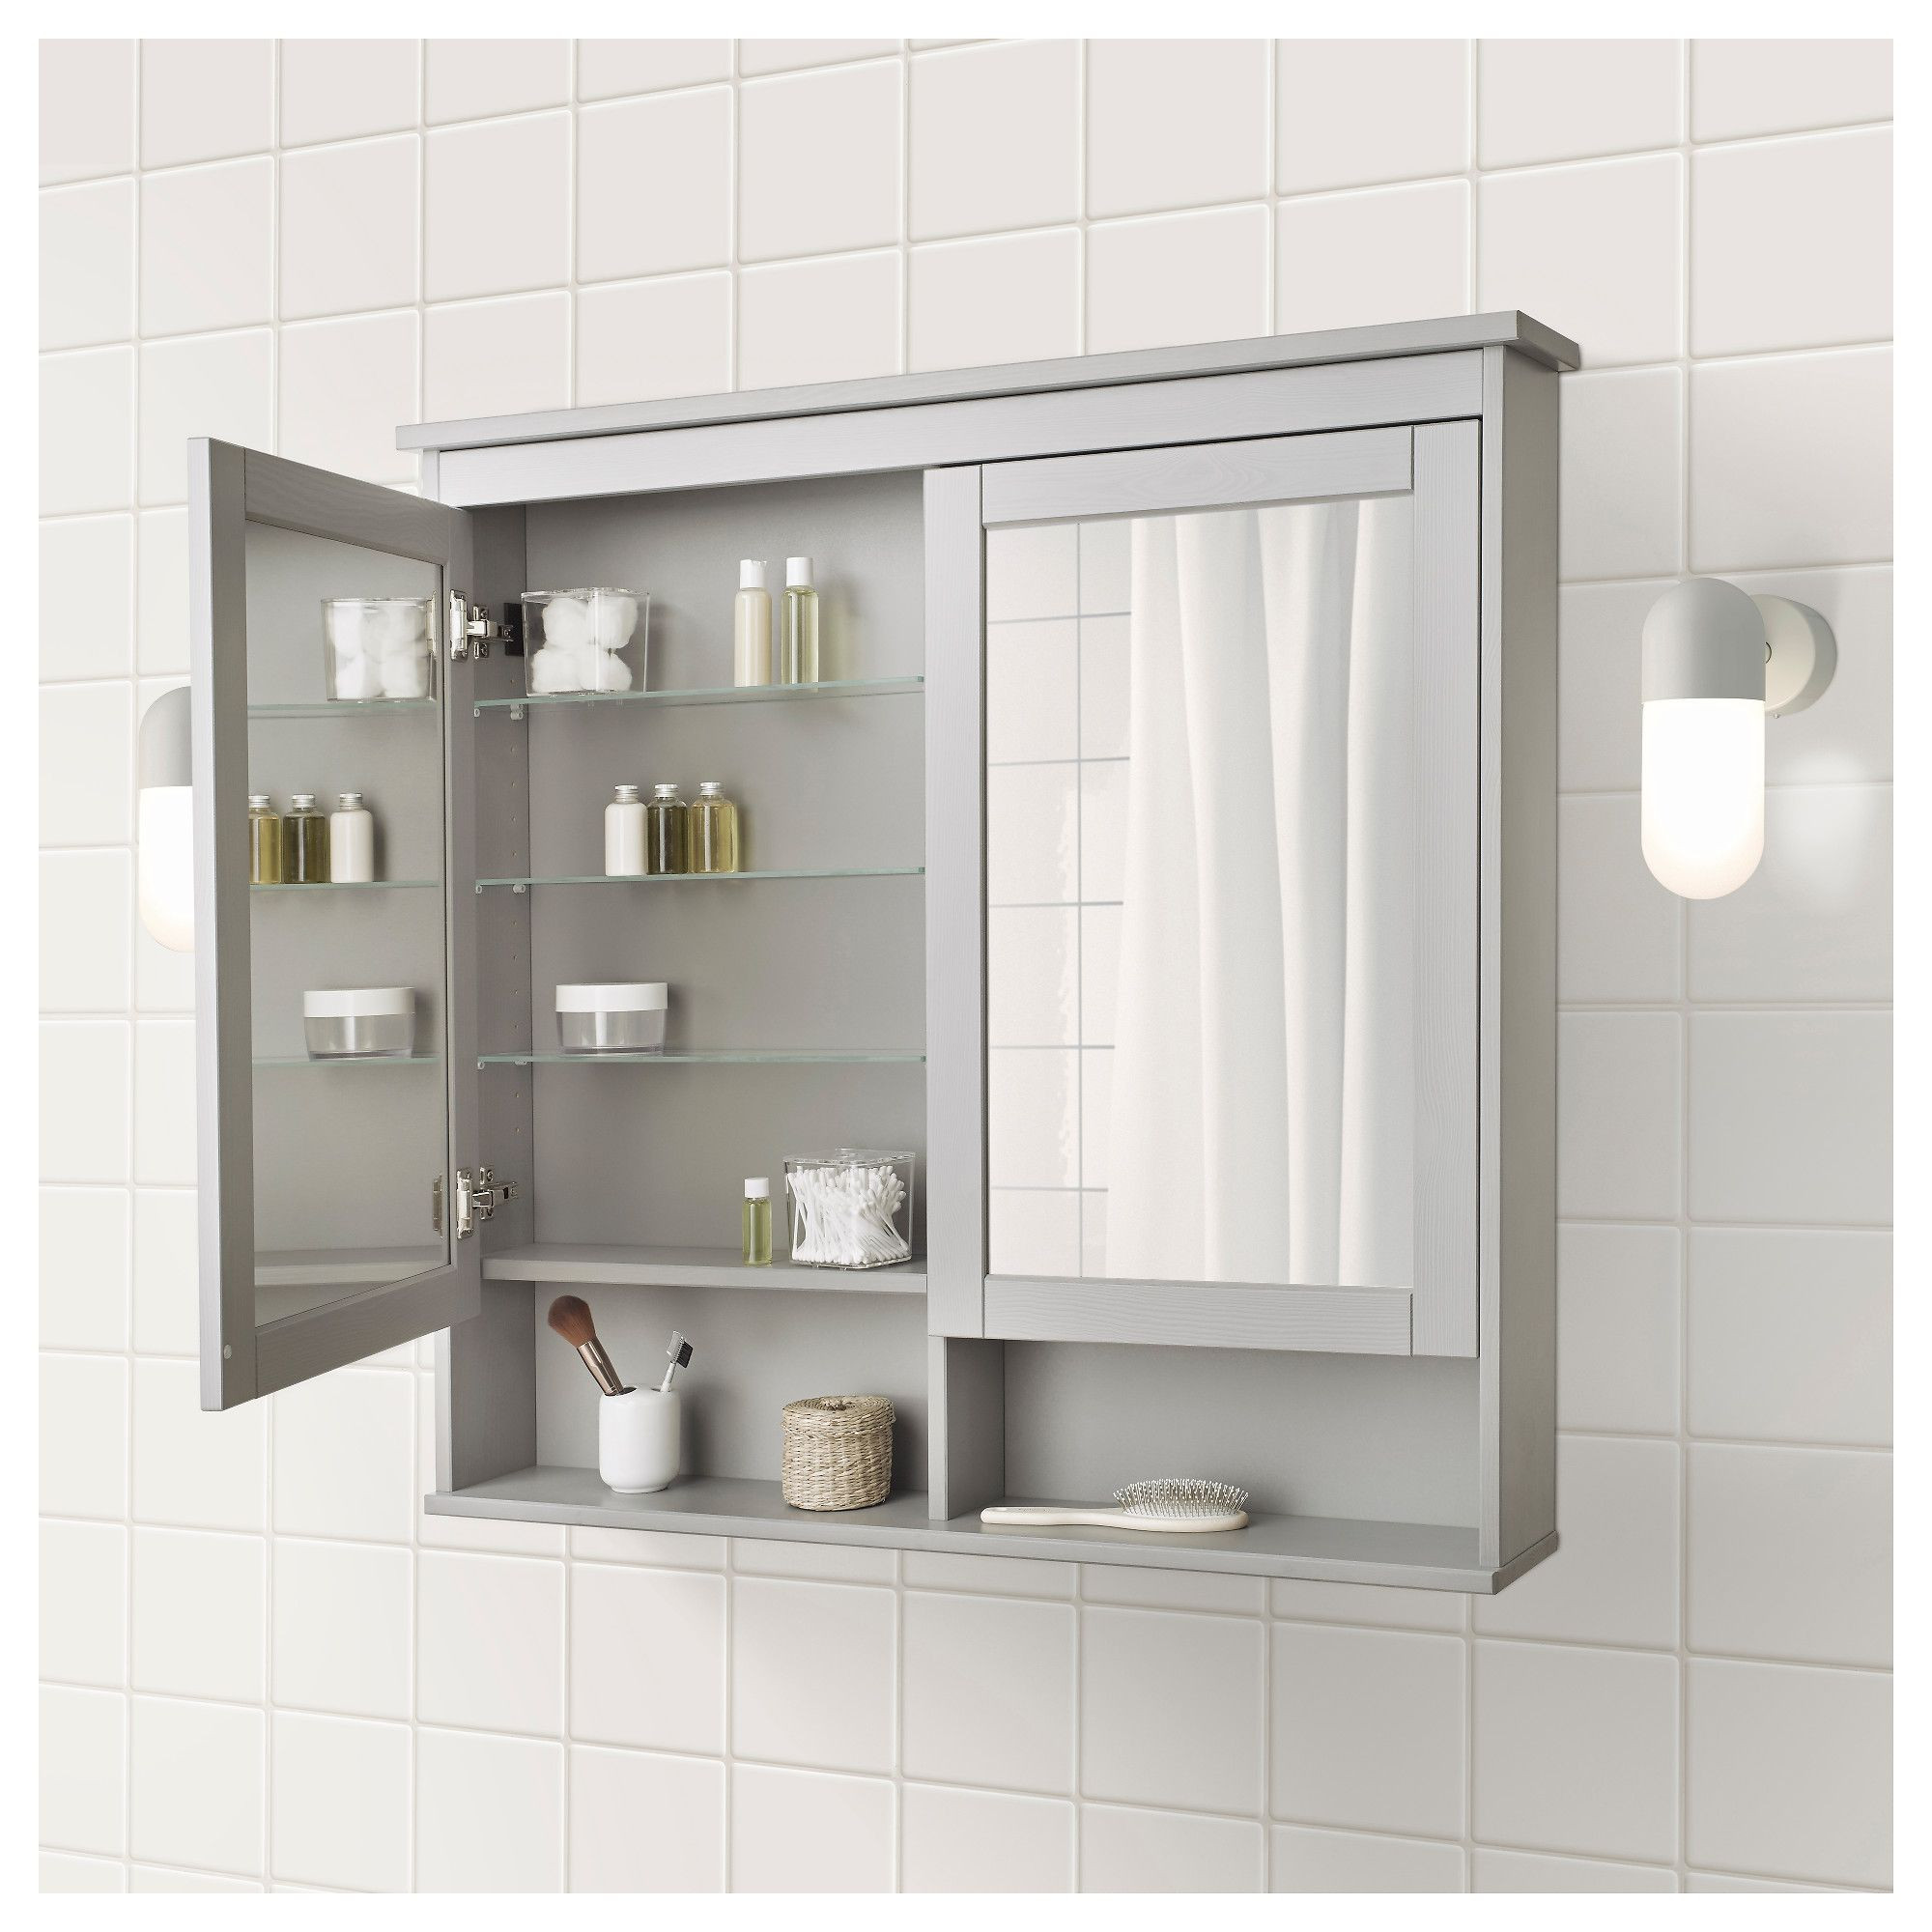 Bathroom Medicine Cabinets Ikea Inspirational Hemnes Mirror Cabinet With 2 Doors Gray 40 1 2x6 1 4x38 Of Bathroom Medicine Cabinets Ikea 